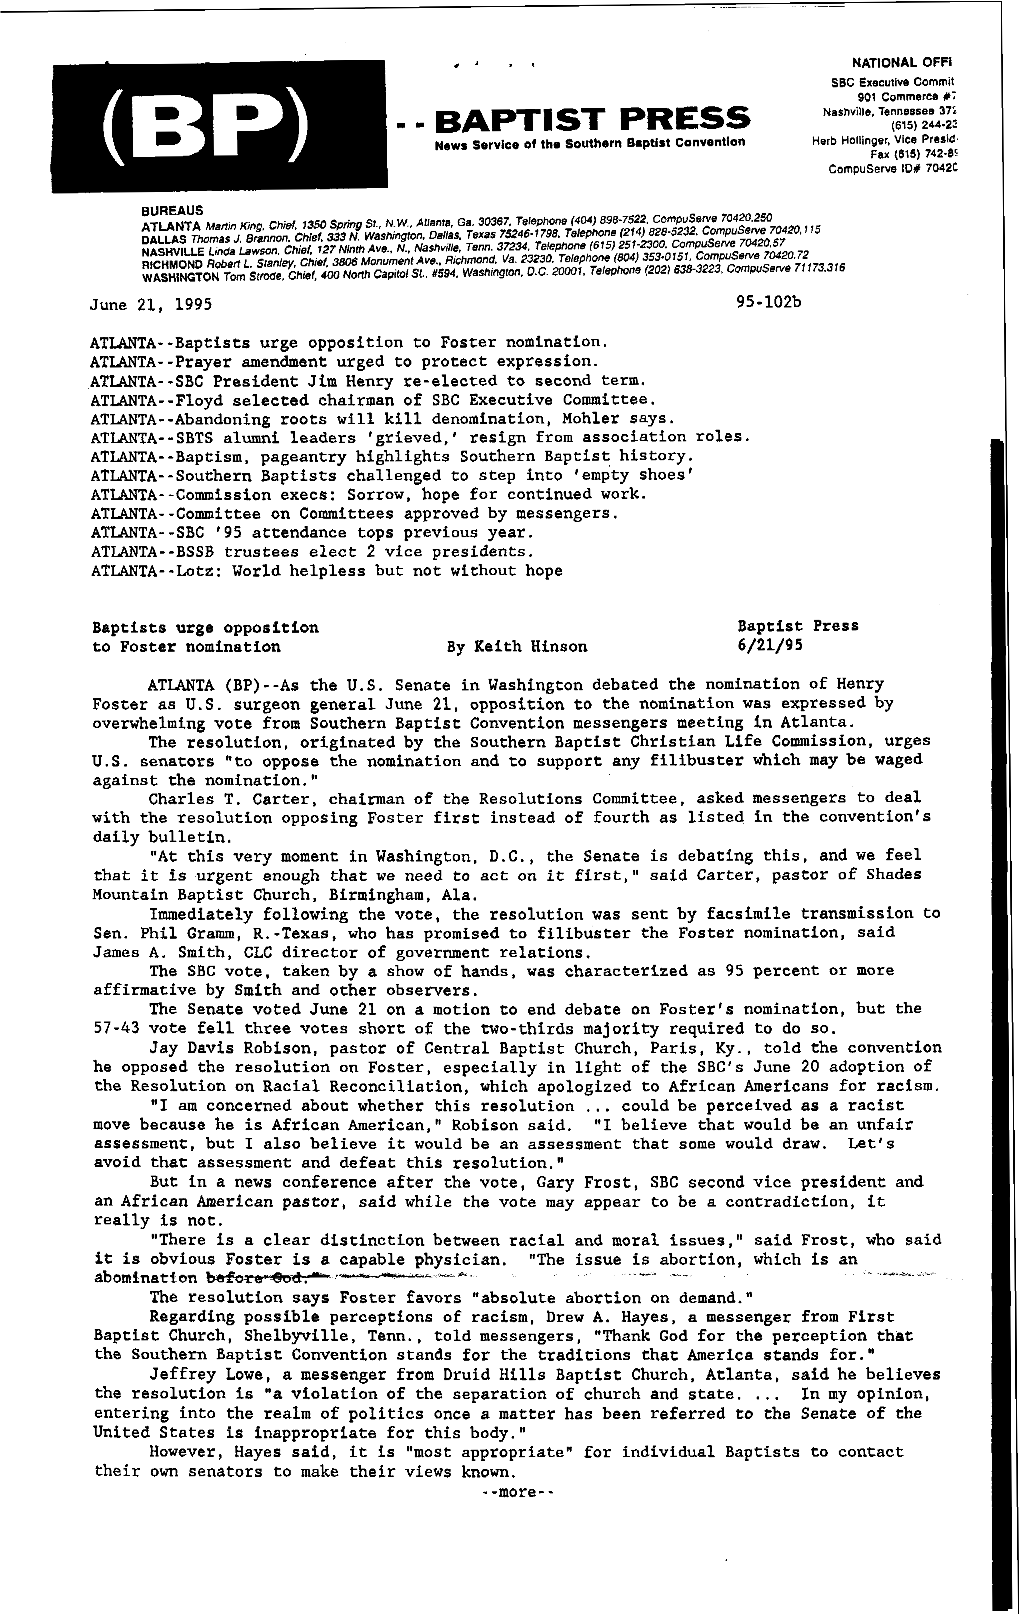 June 21, 1995 95 - 102B ATLANTA--Baptists Urge Opposition to Foster Nomination